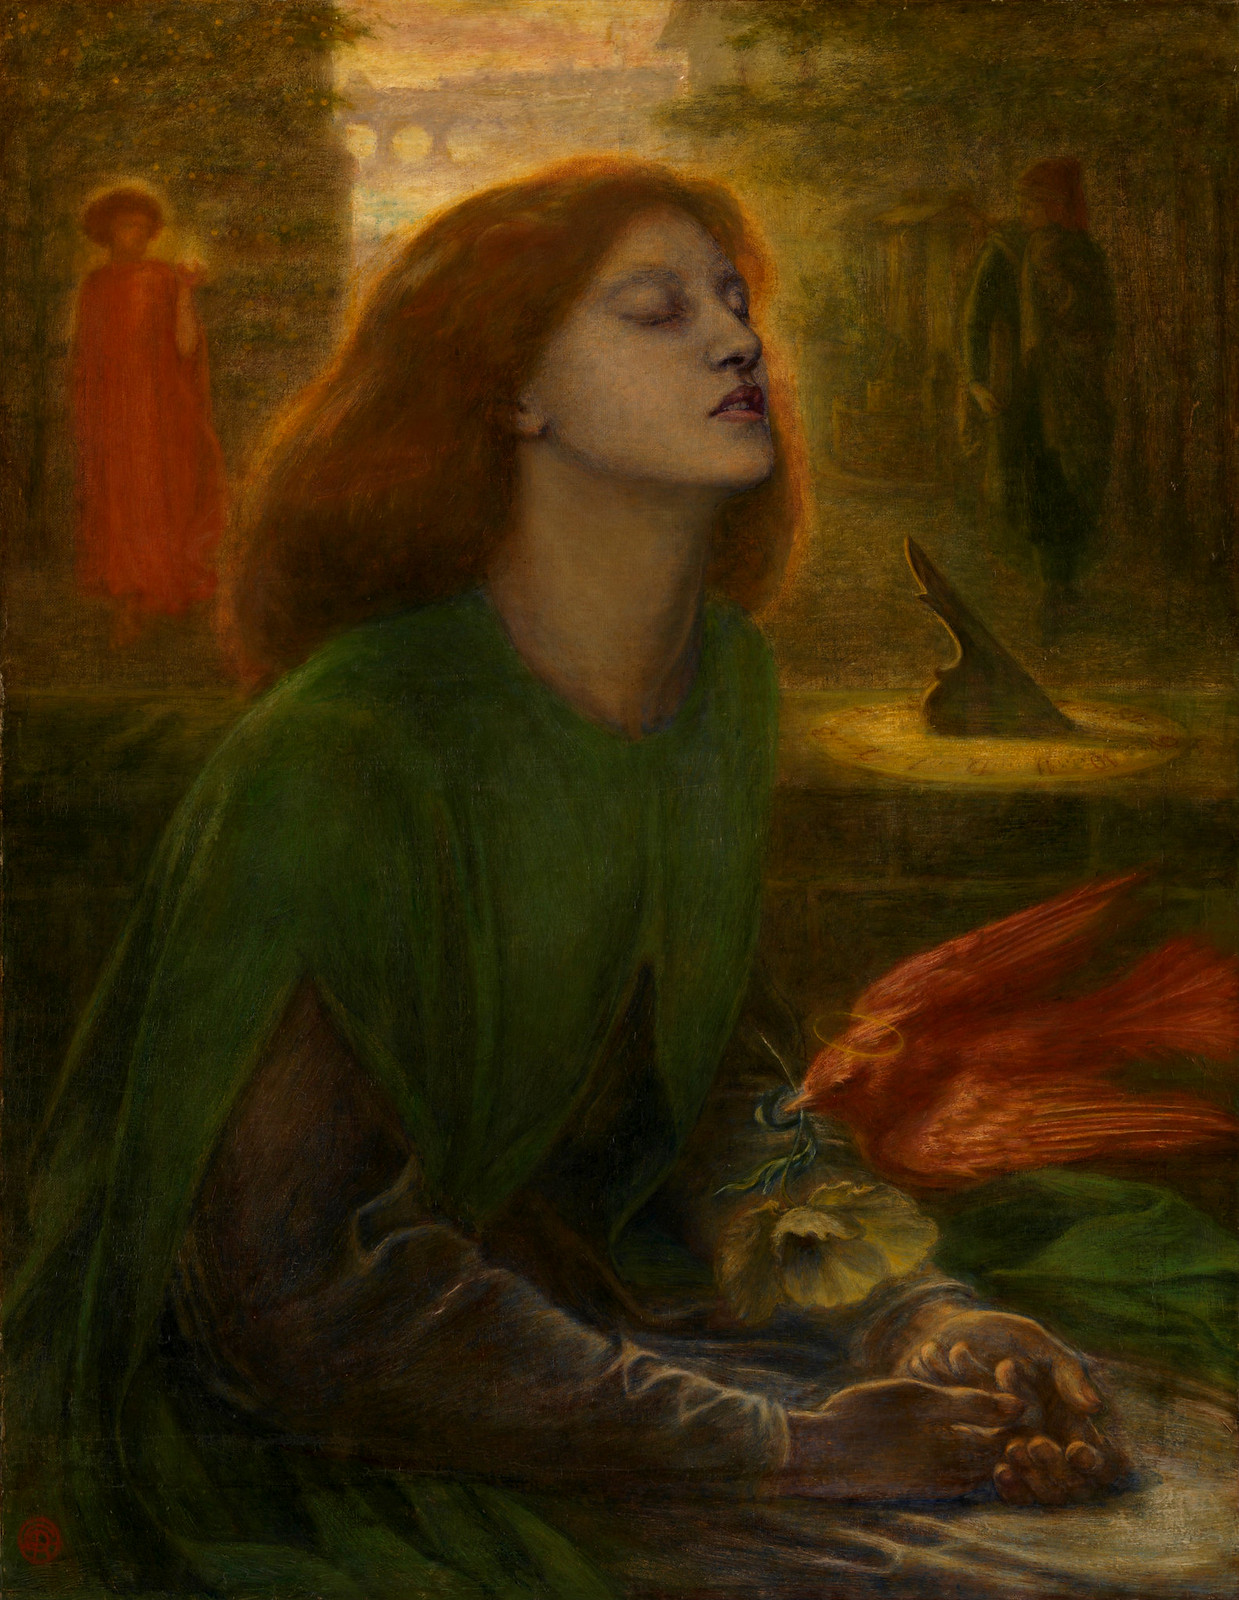 Beata Beatrix by Dante Gabriel Rossetti, 1864